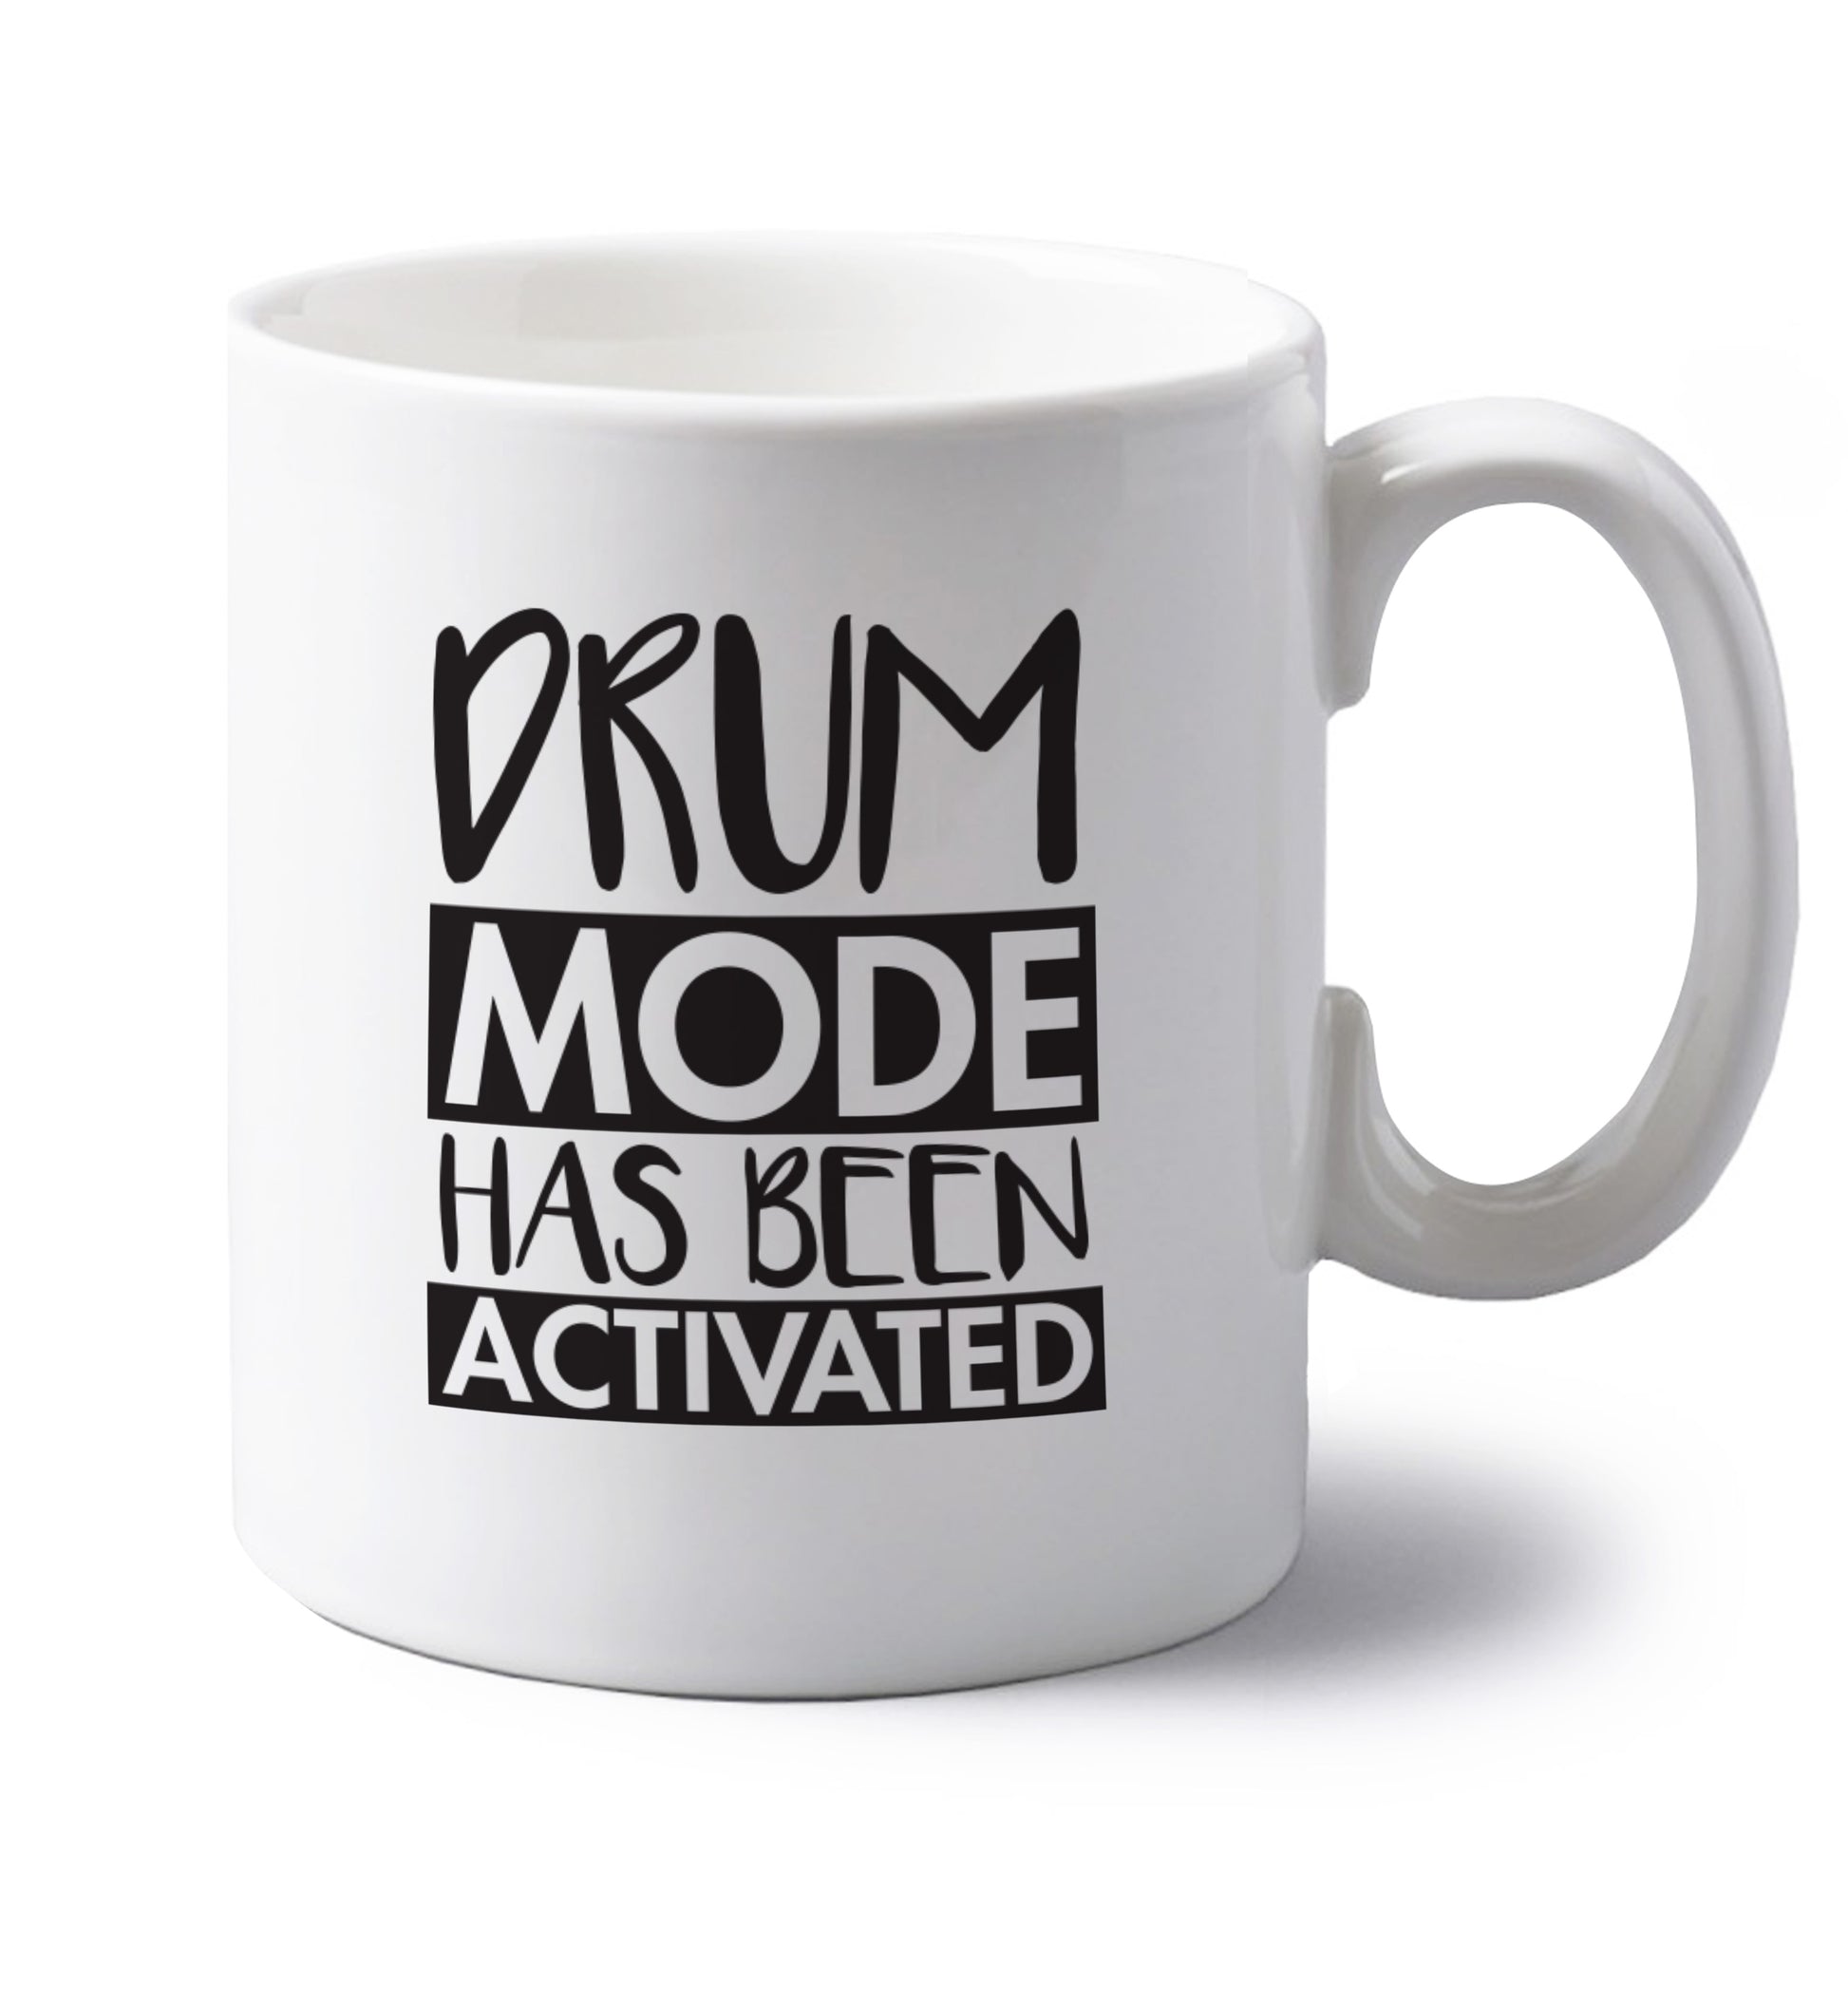 Drum mode activated left handed white ceramic mug 